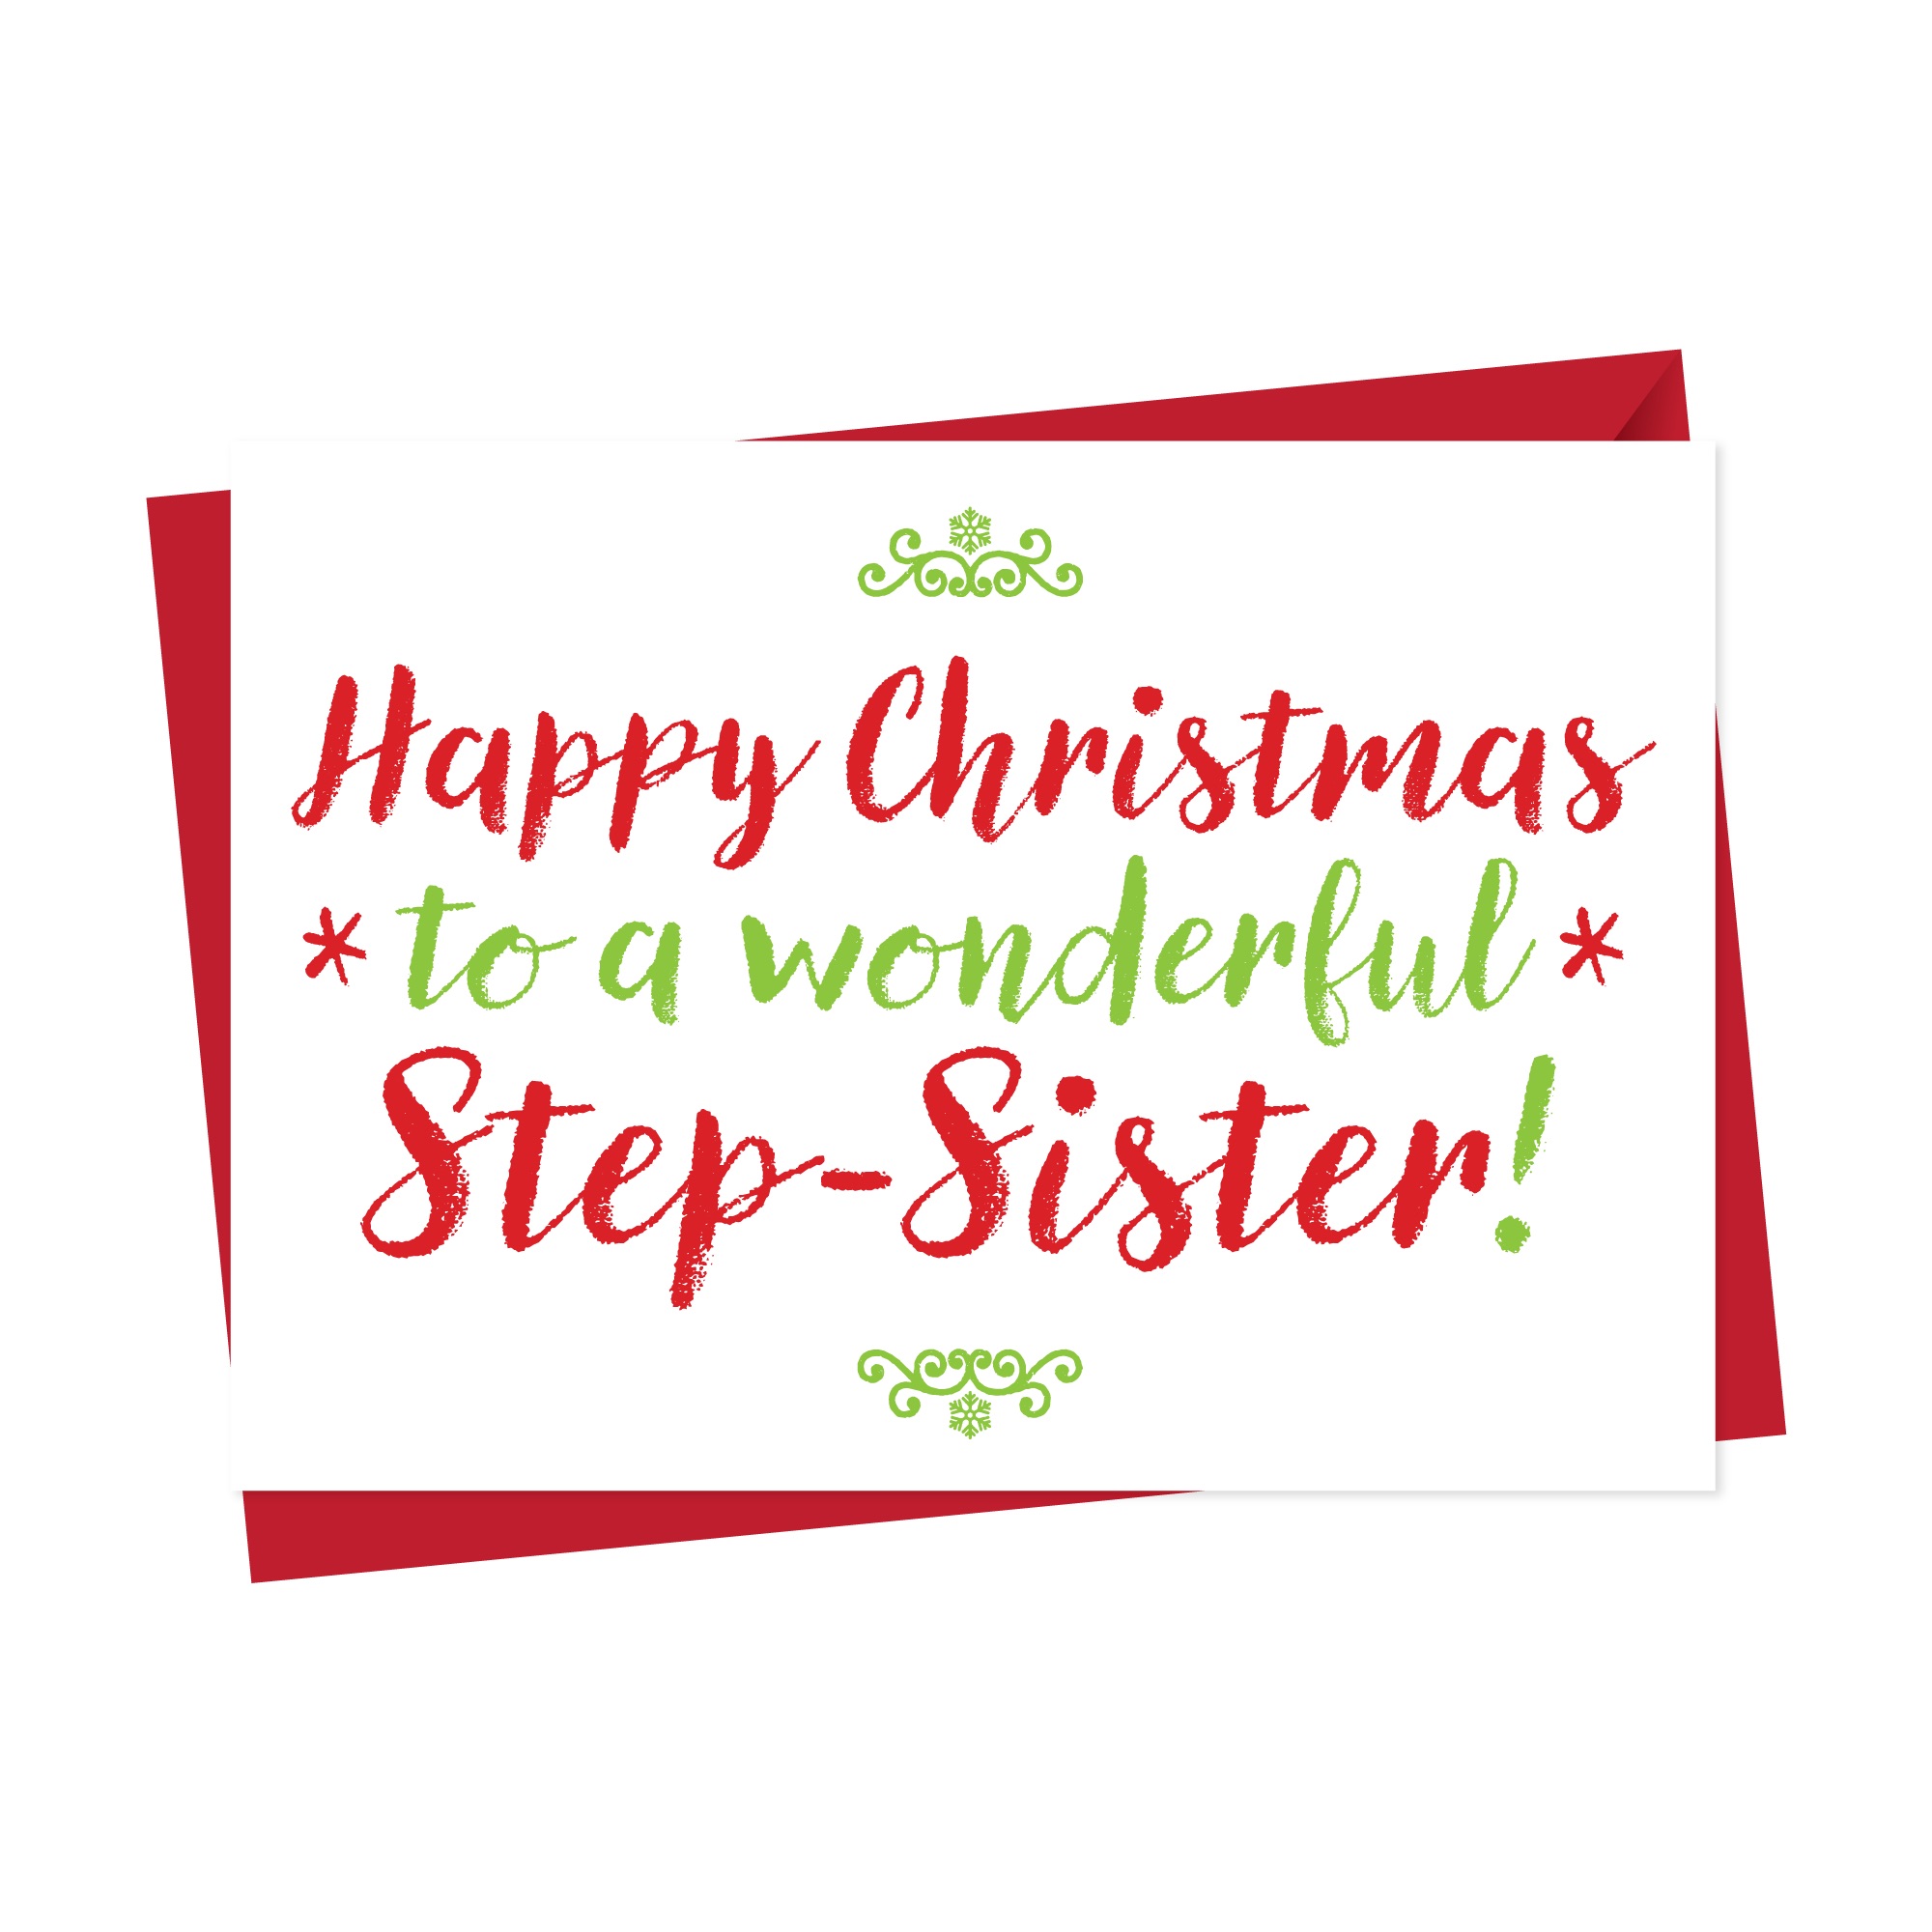 Christmas Card For Wonderful Step Sister